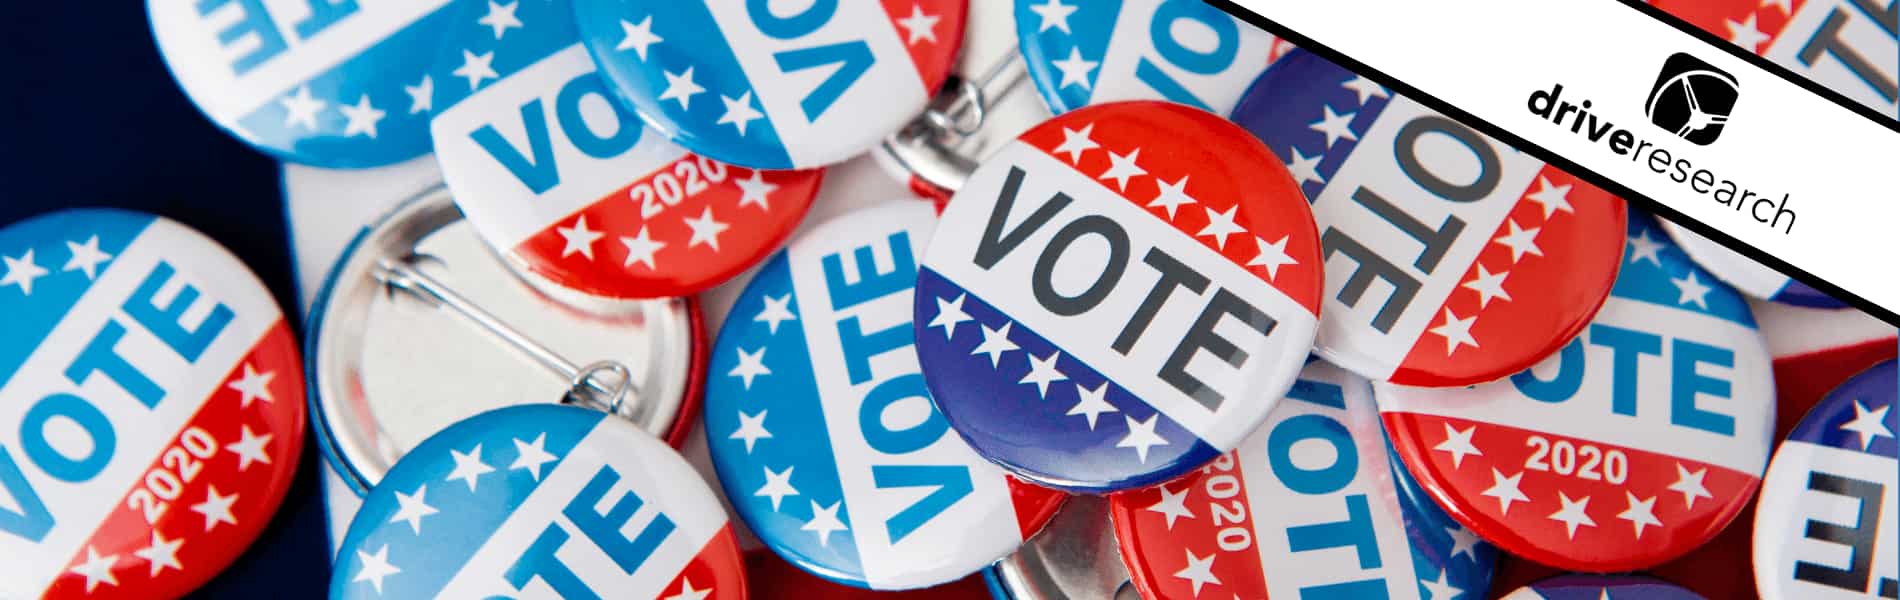 vote badges - political surveys